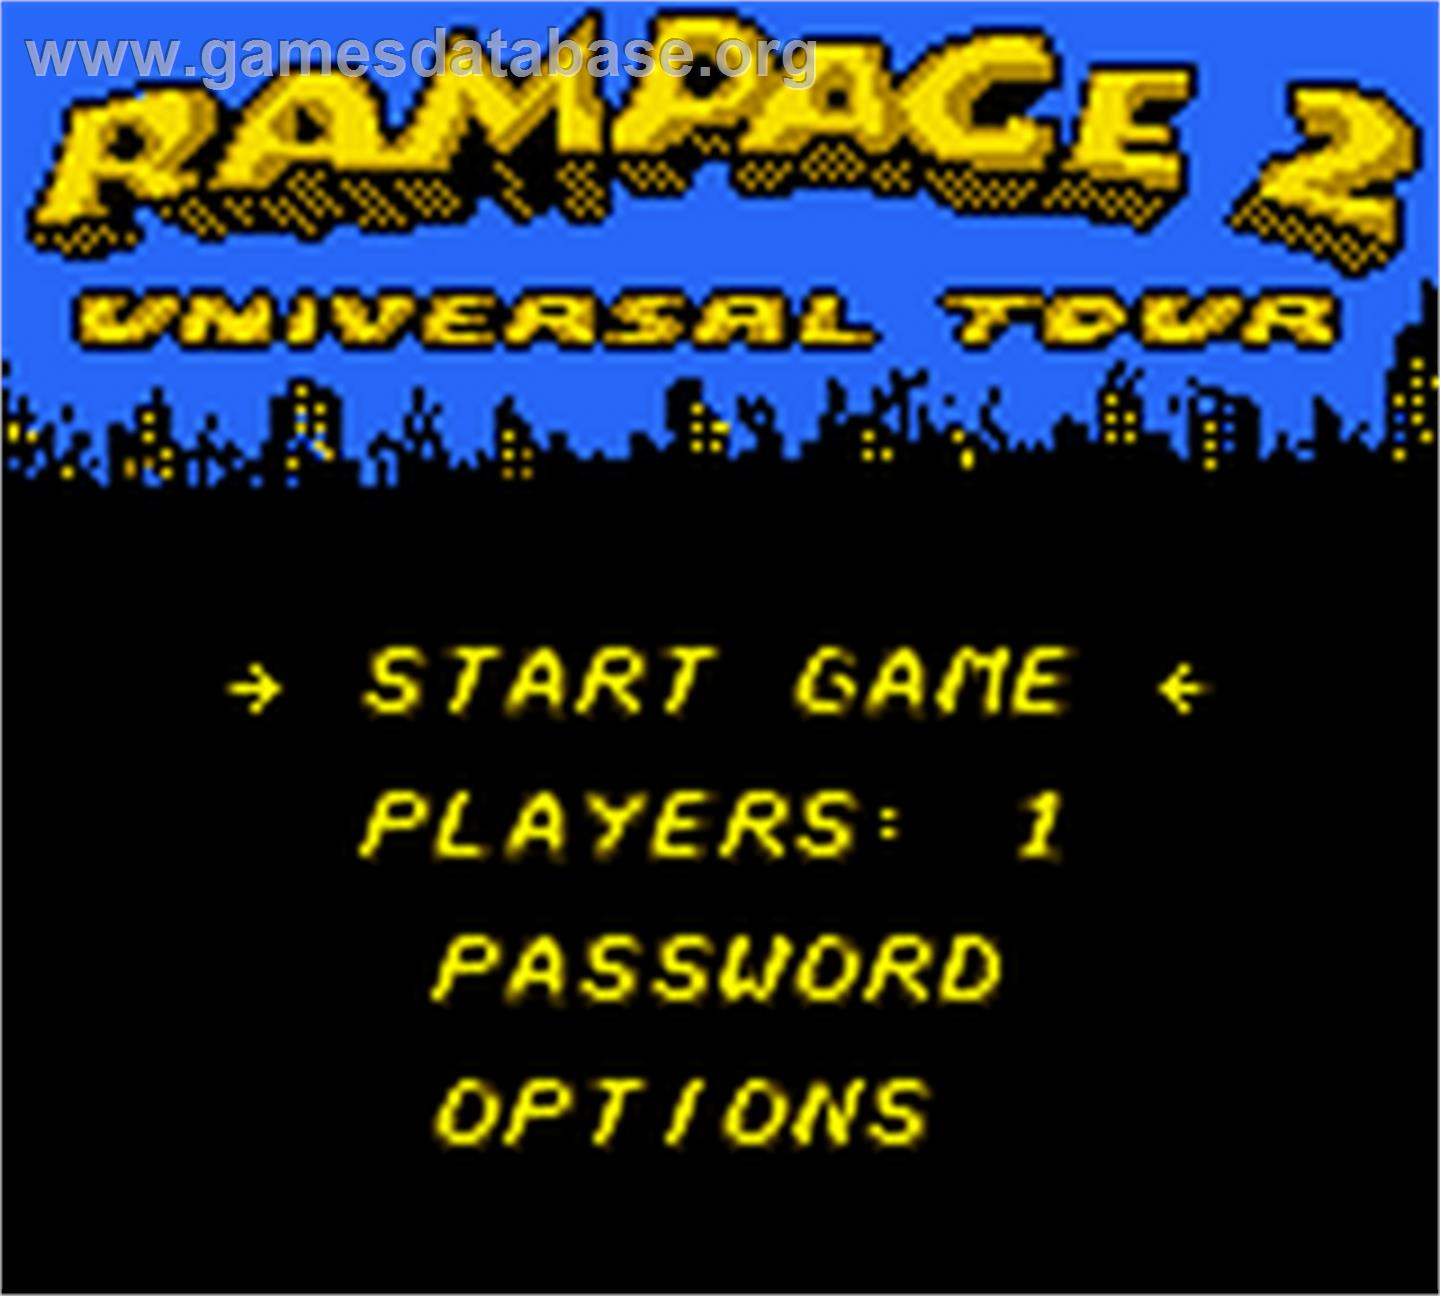 Rampage: Universal Tour - Nintendo Game Boy Color - Artwork - Title Screen